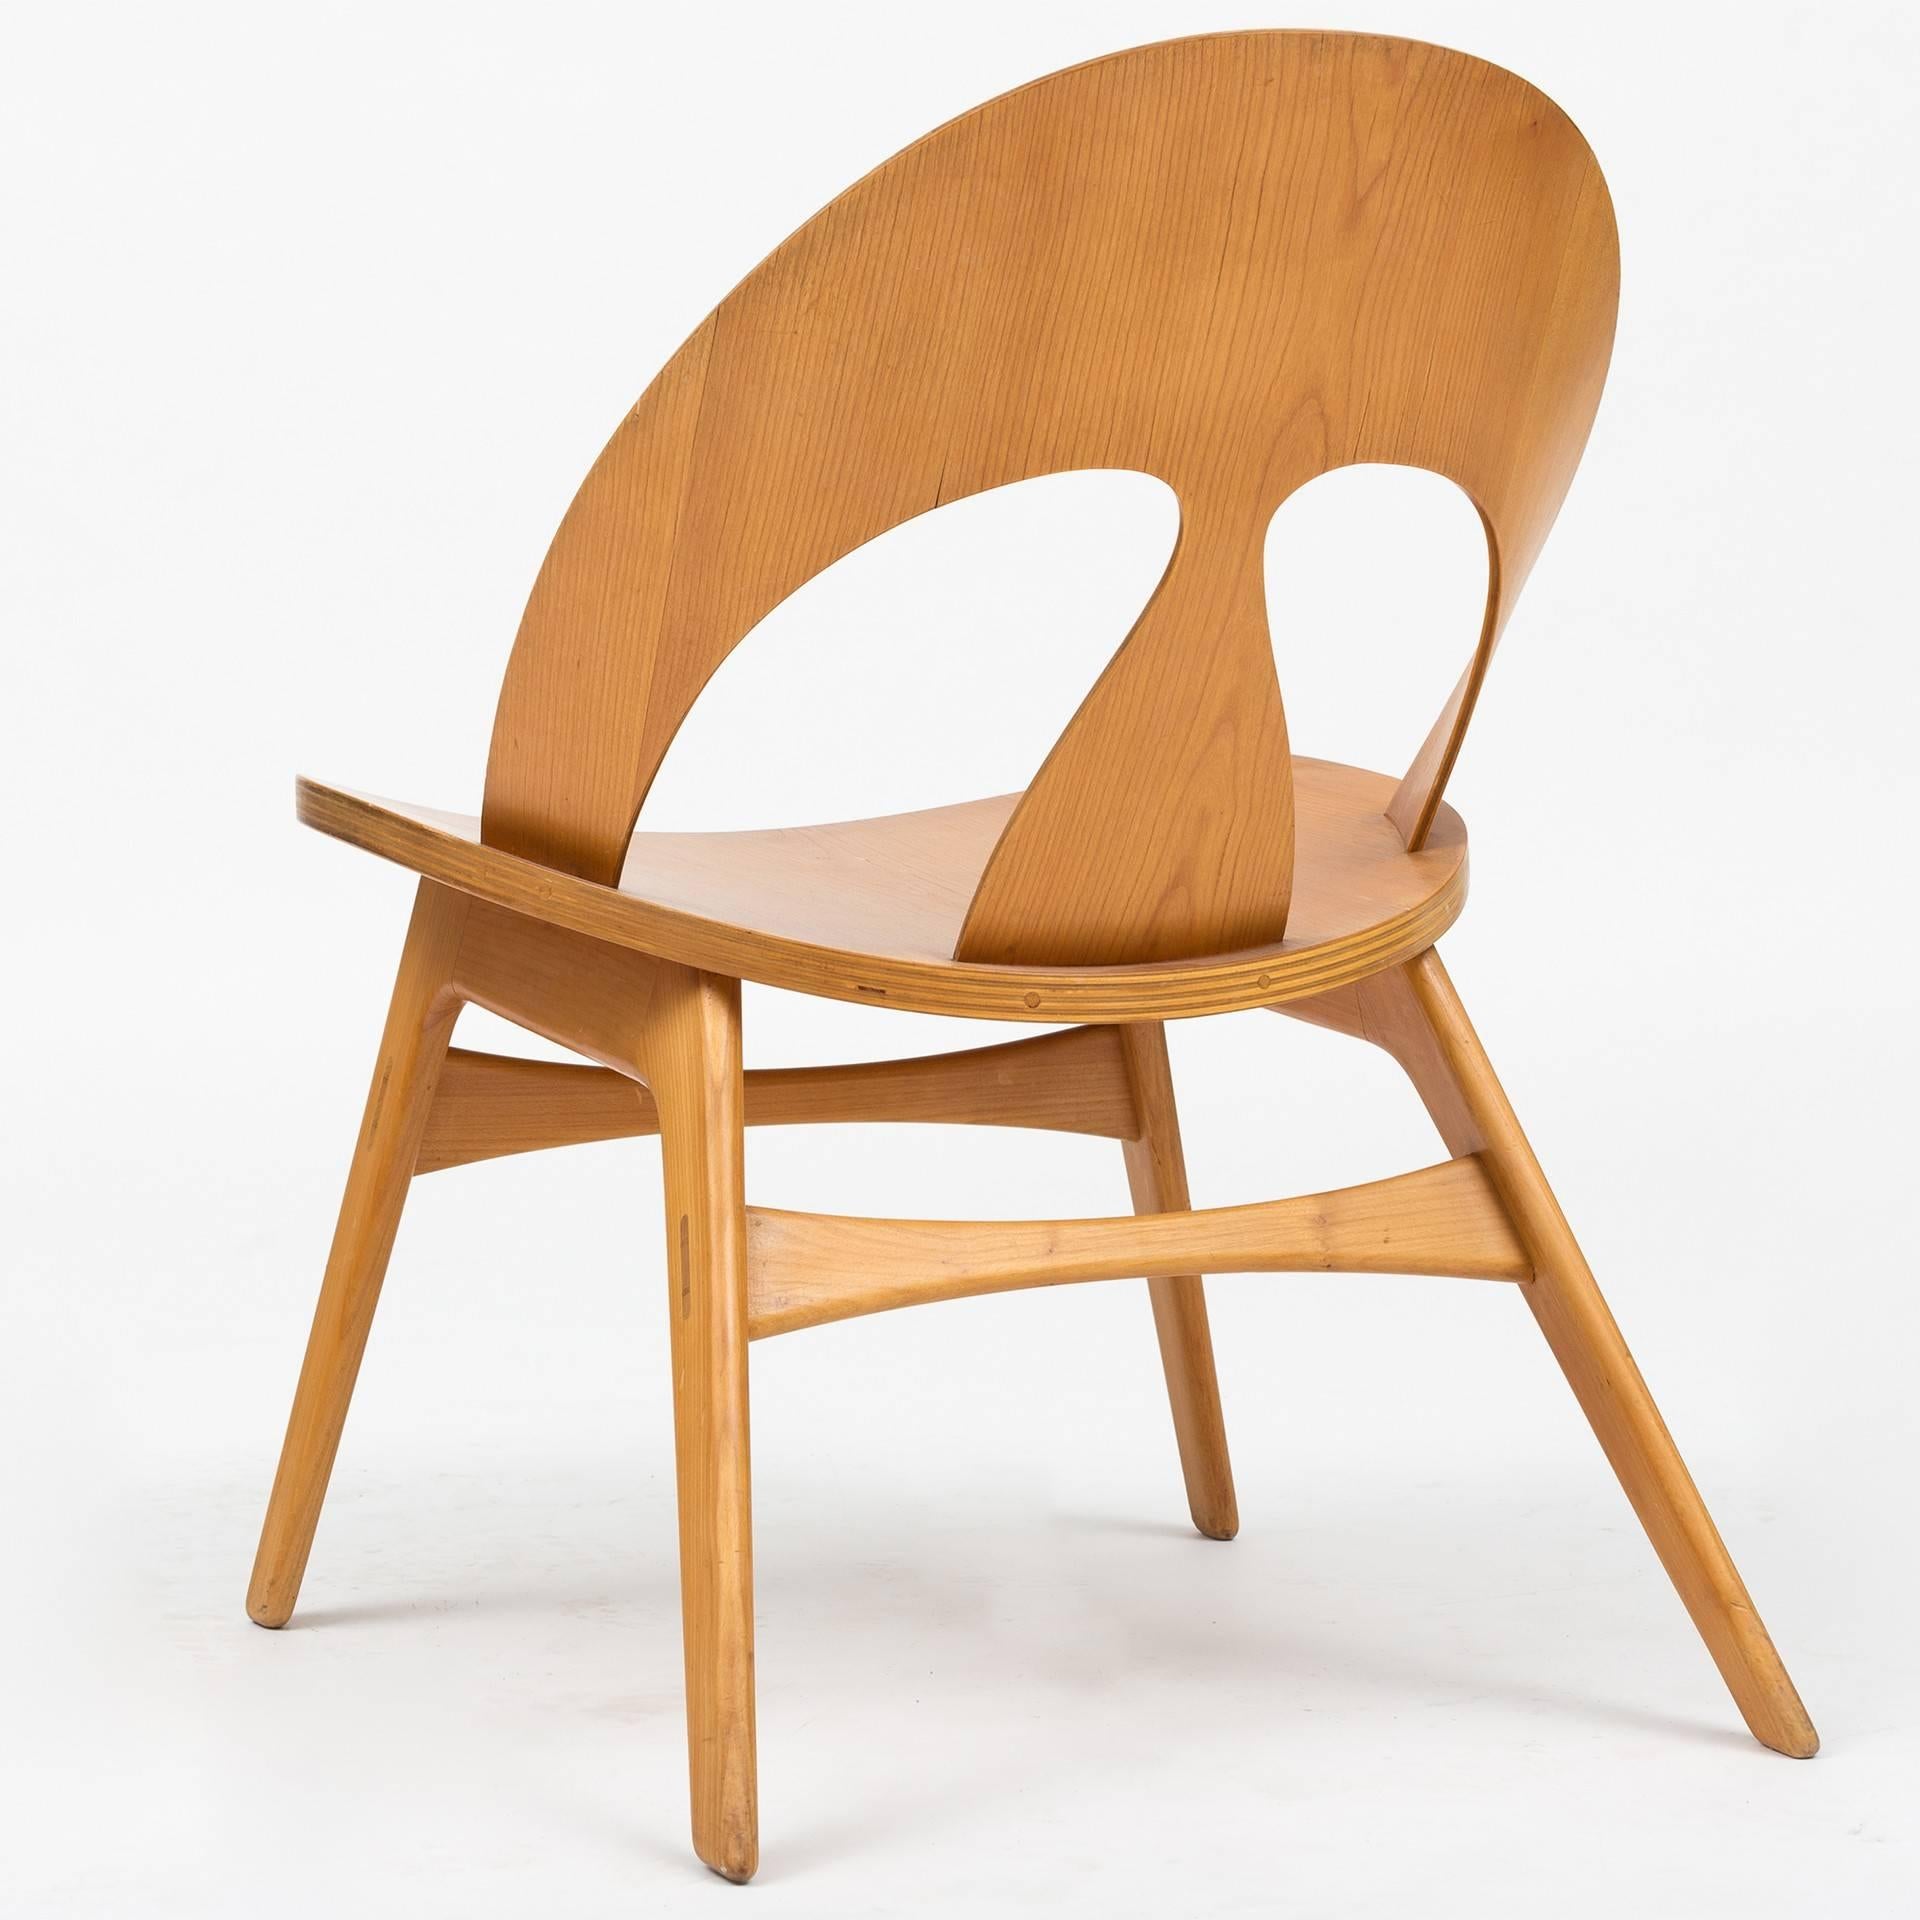 Easy chair in cherry by Børge Mogensen. Maker Erhard Rasmussen.